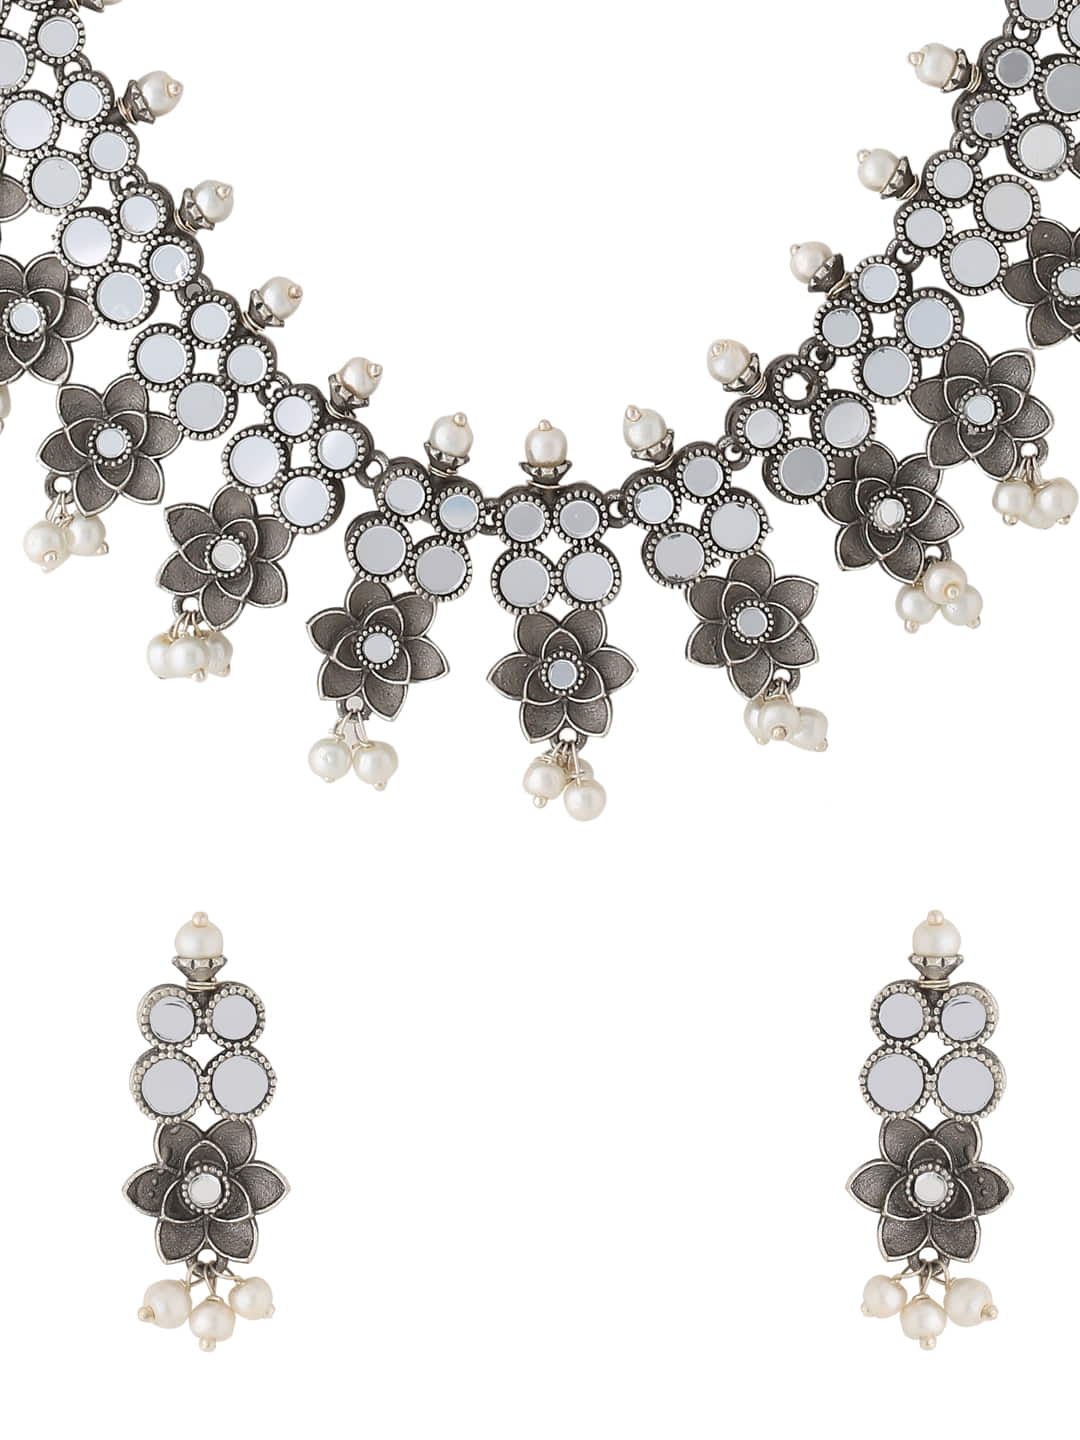 antique-oxidised-floral-shape-mirror-necklace-set-viraasi